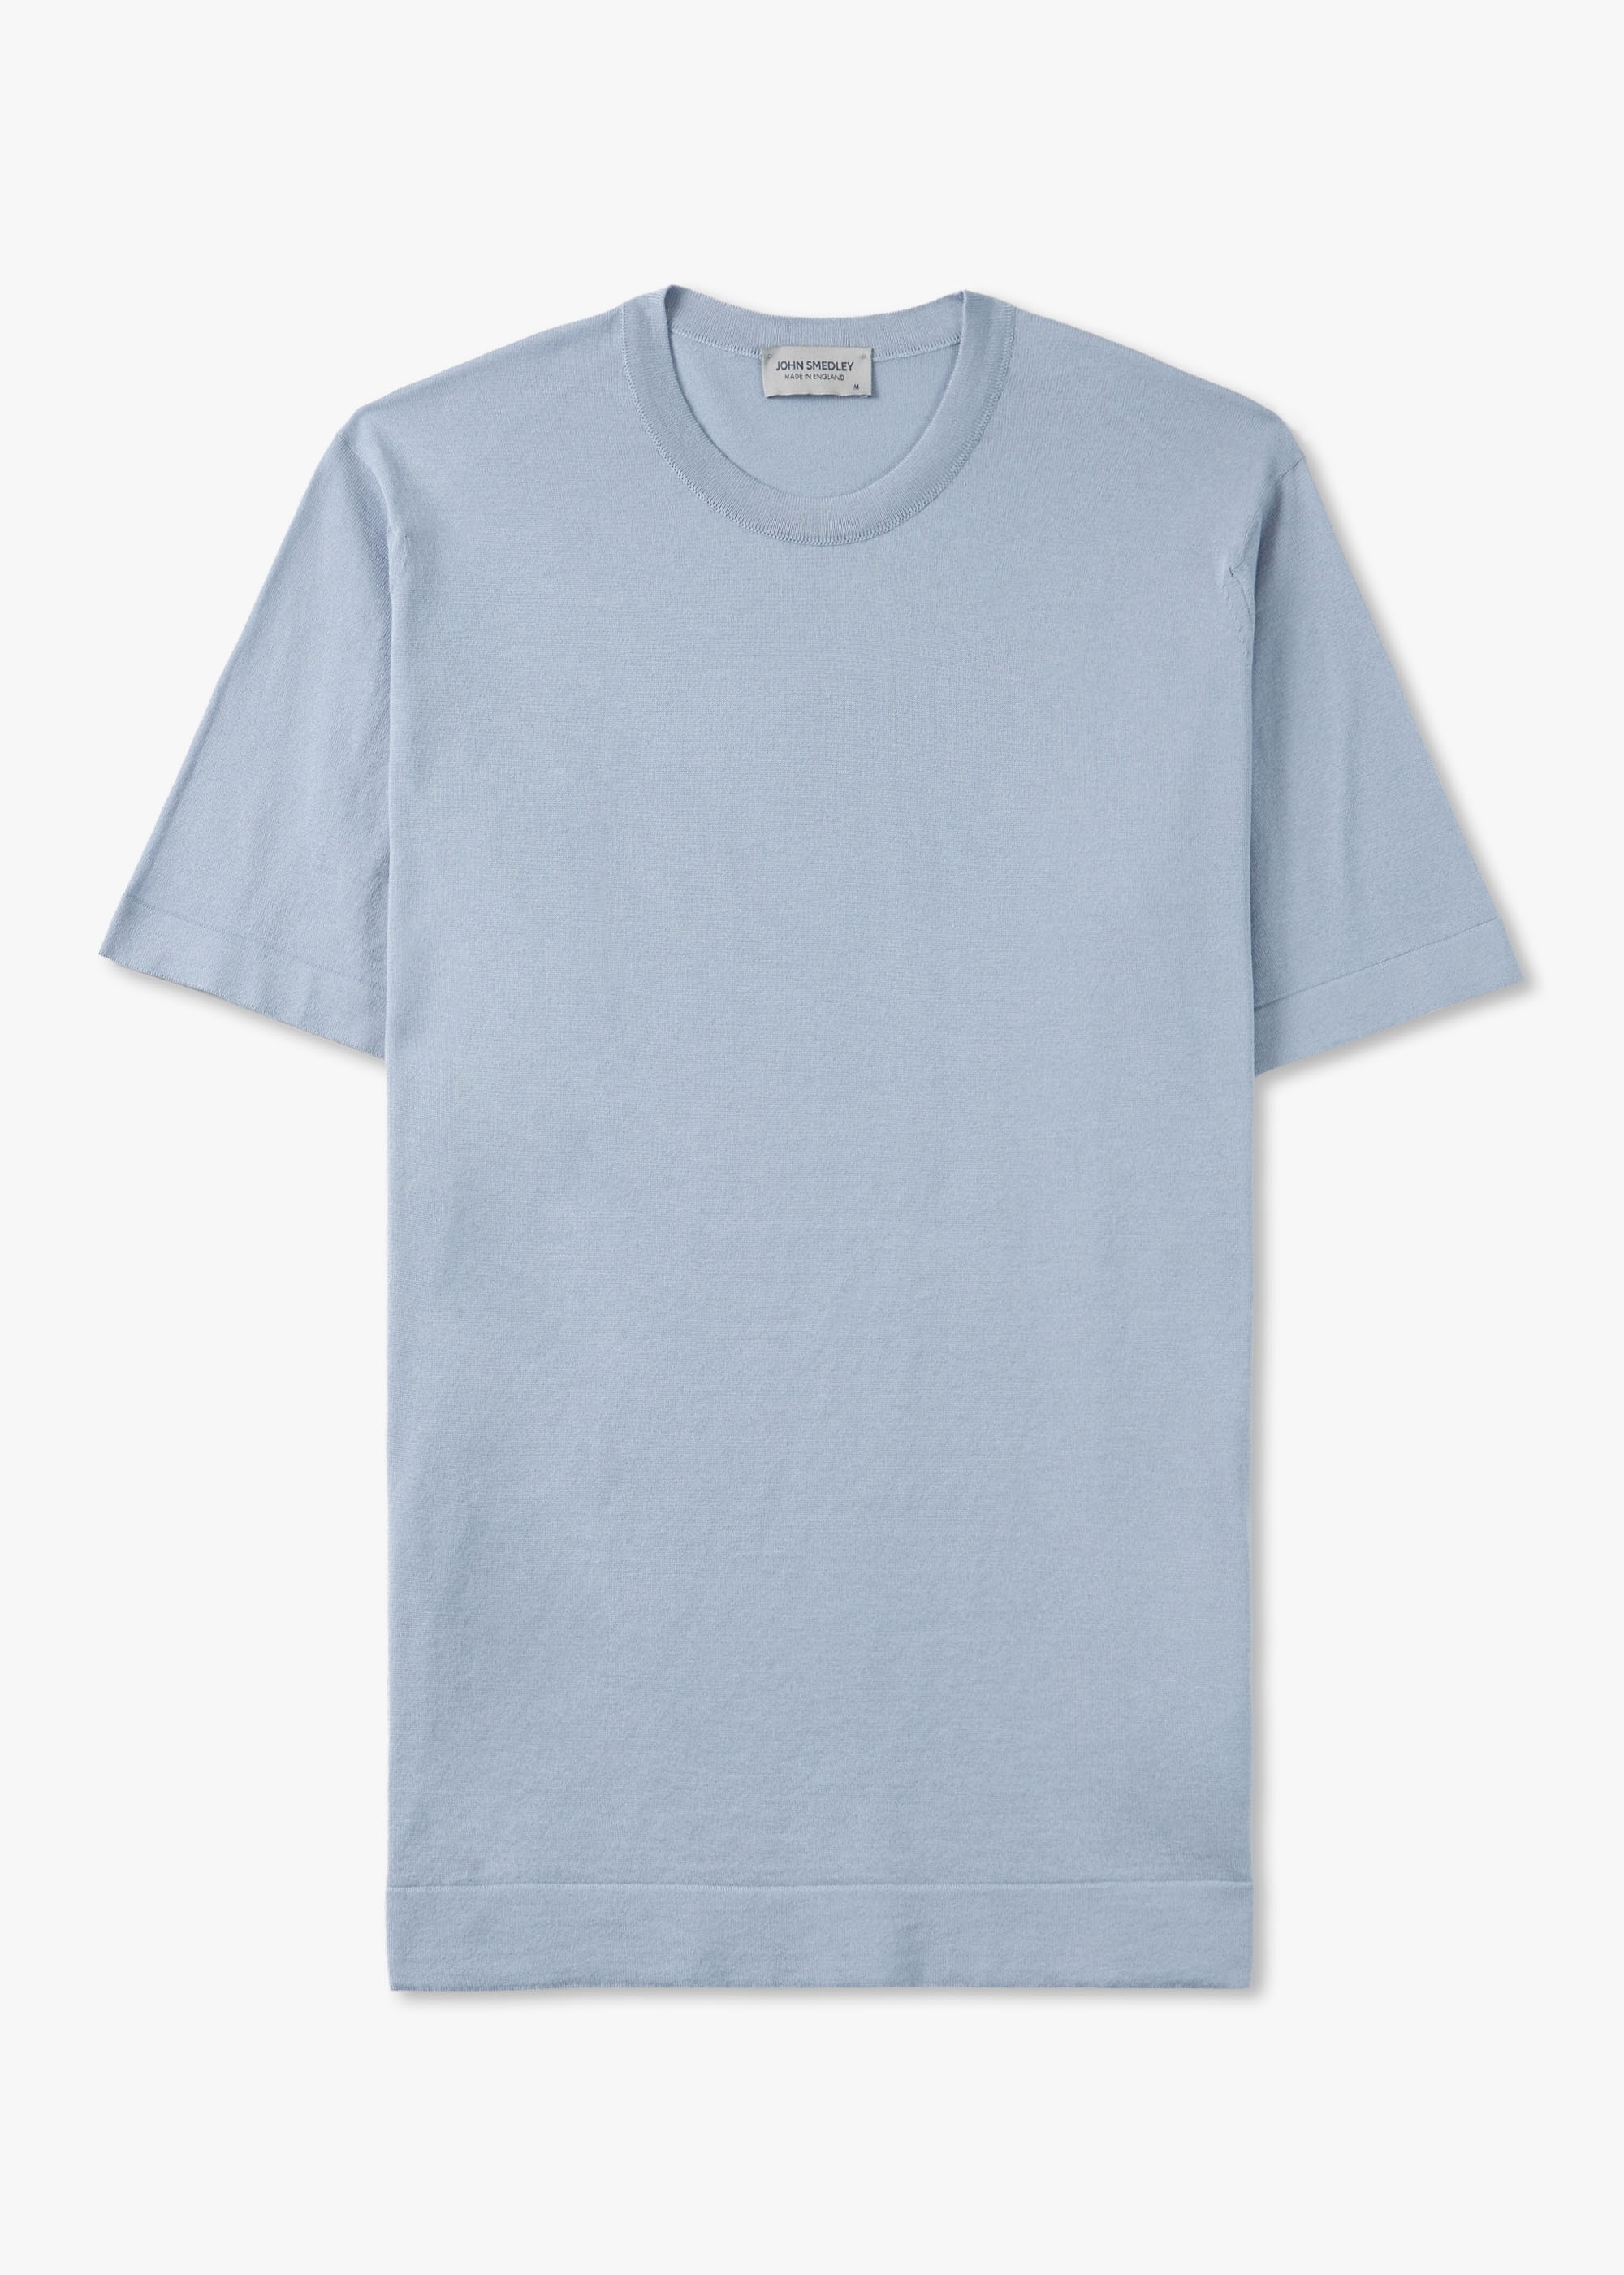 John Smedley Mens Lorca T-Shirt In Mirage Blue